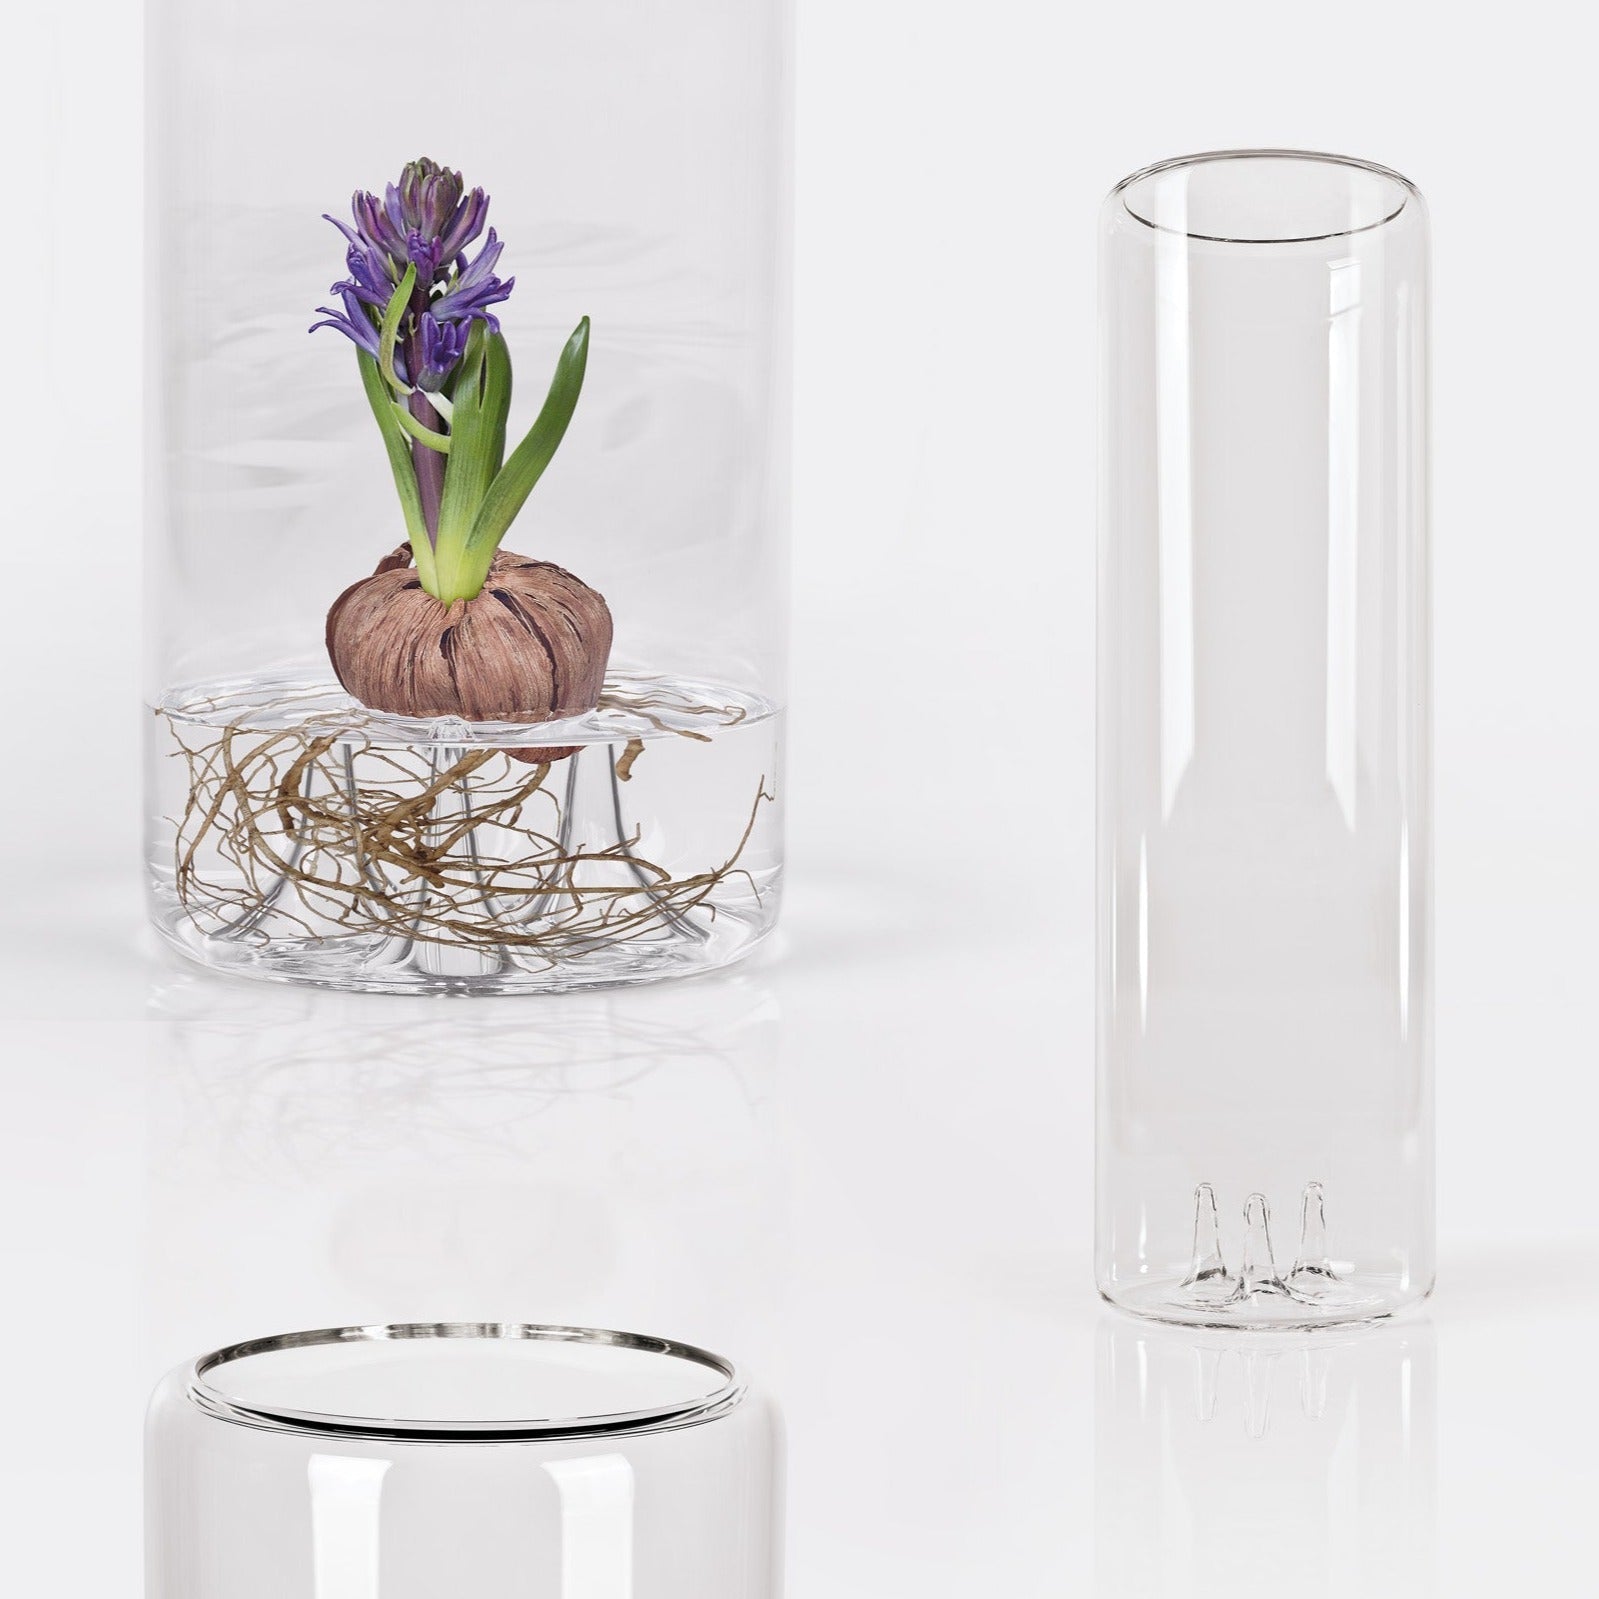 Benia, glass vase for bulb growth